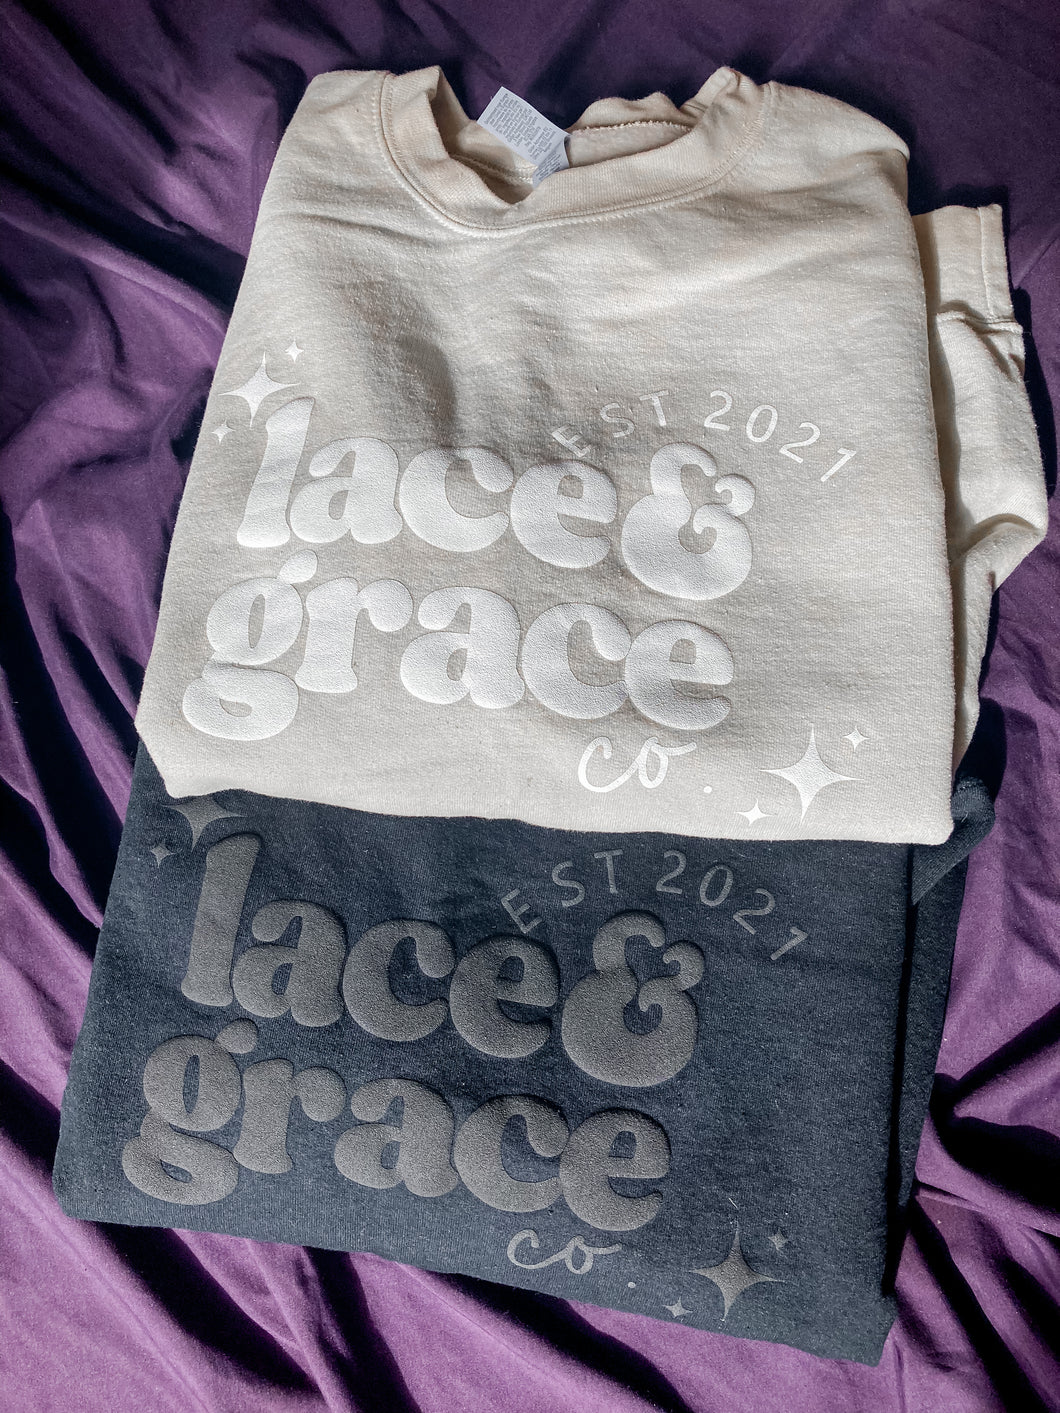 Lace and Grace Co. Crewneck PRE ORDER